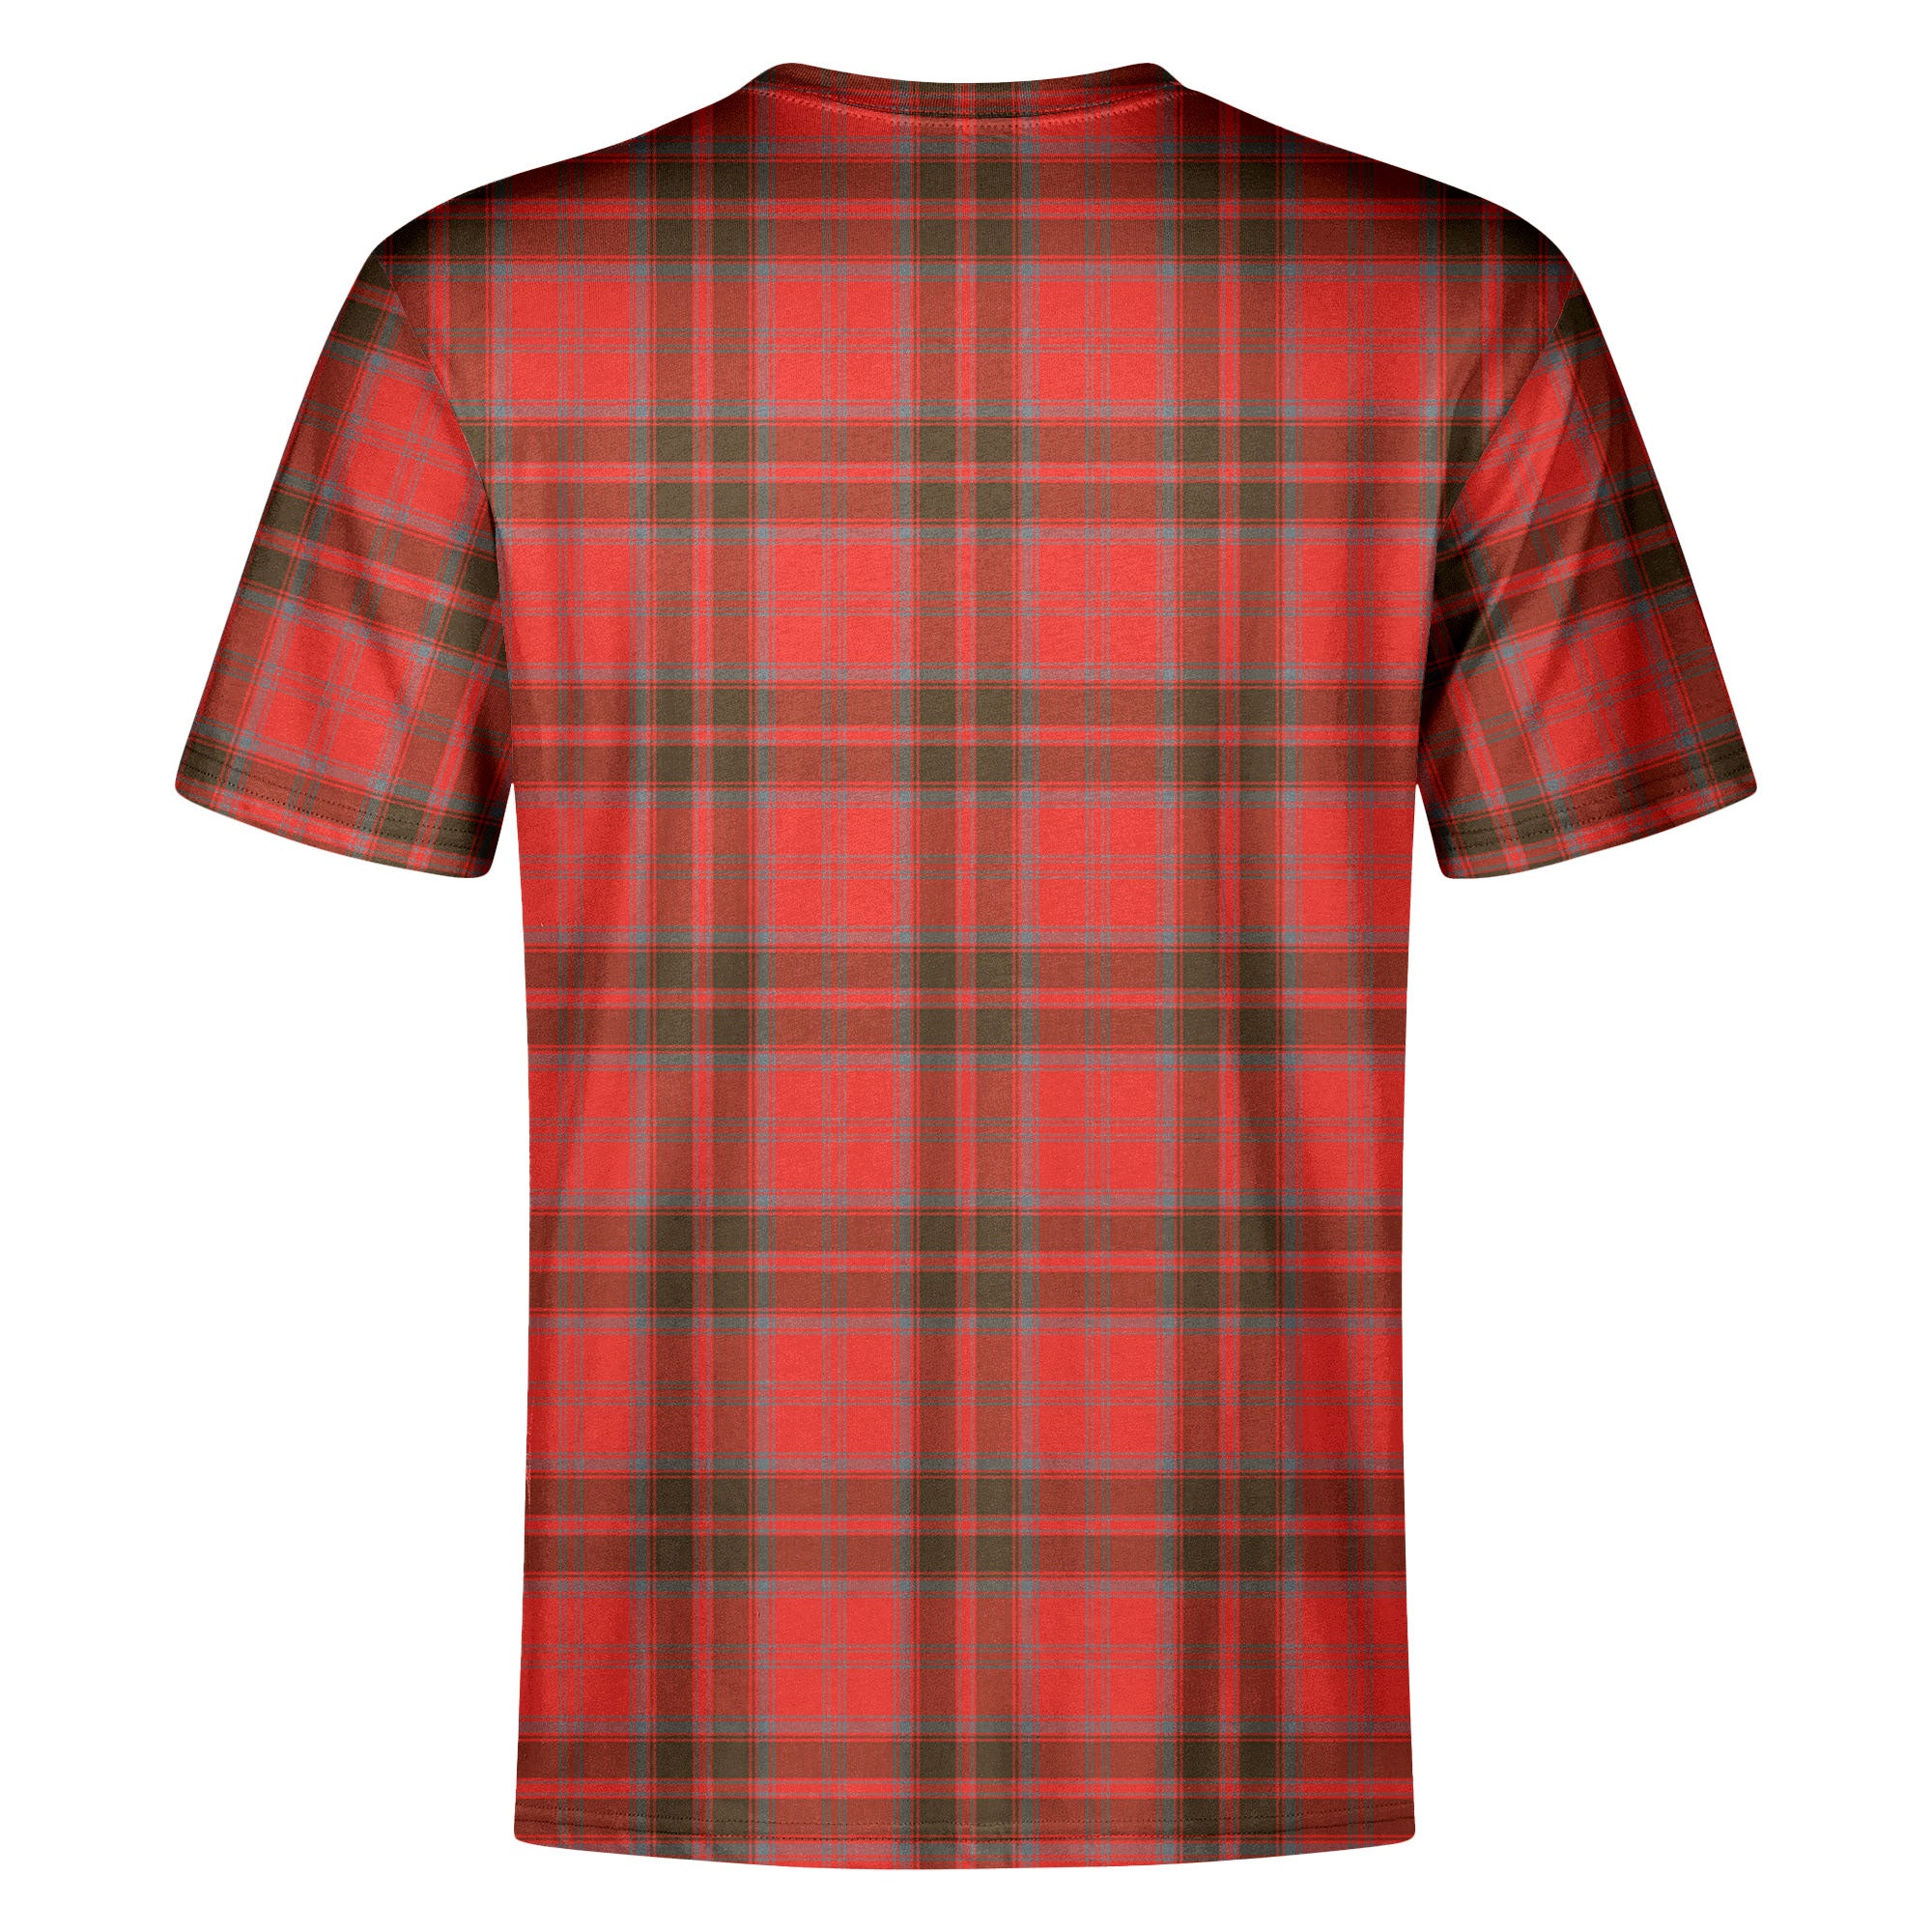 Grant Weathered Tartan Crest T-shirt